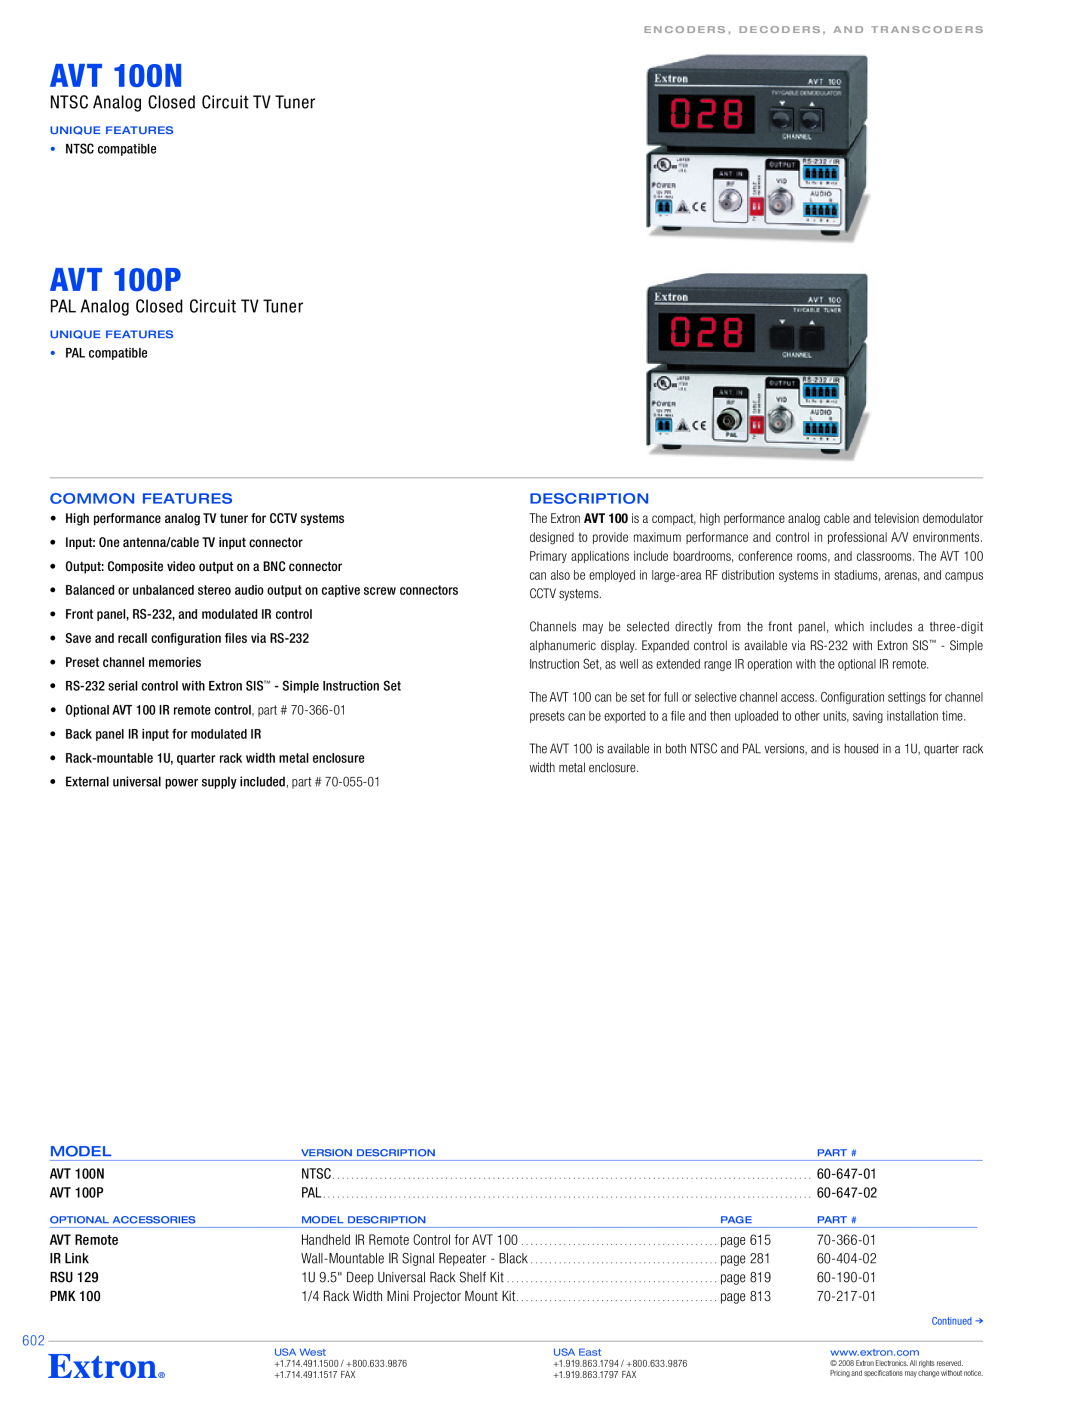 Extron electronic AVT 100N specifications Common Features, Description, Model, AVT 100P 